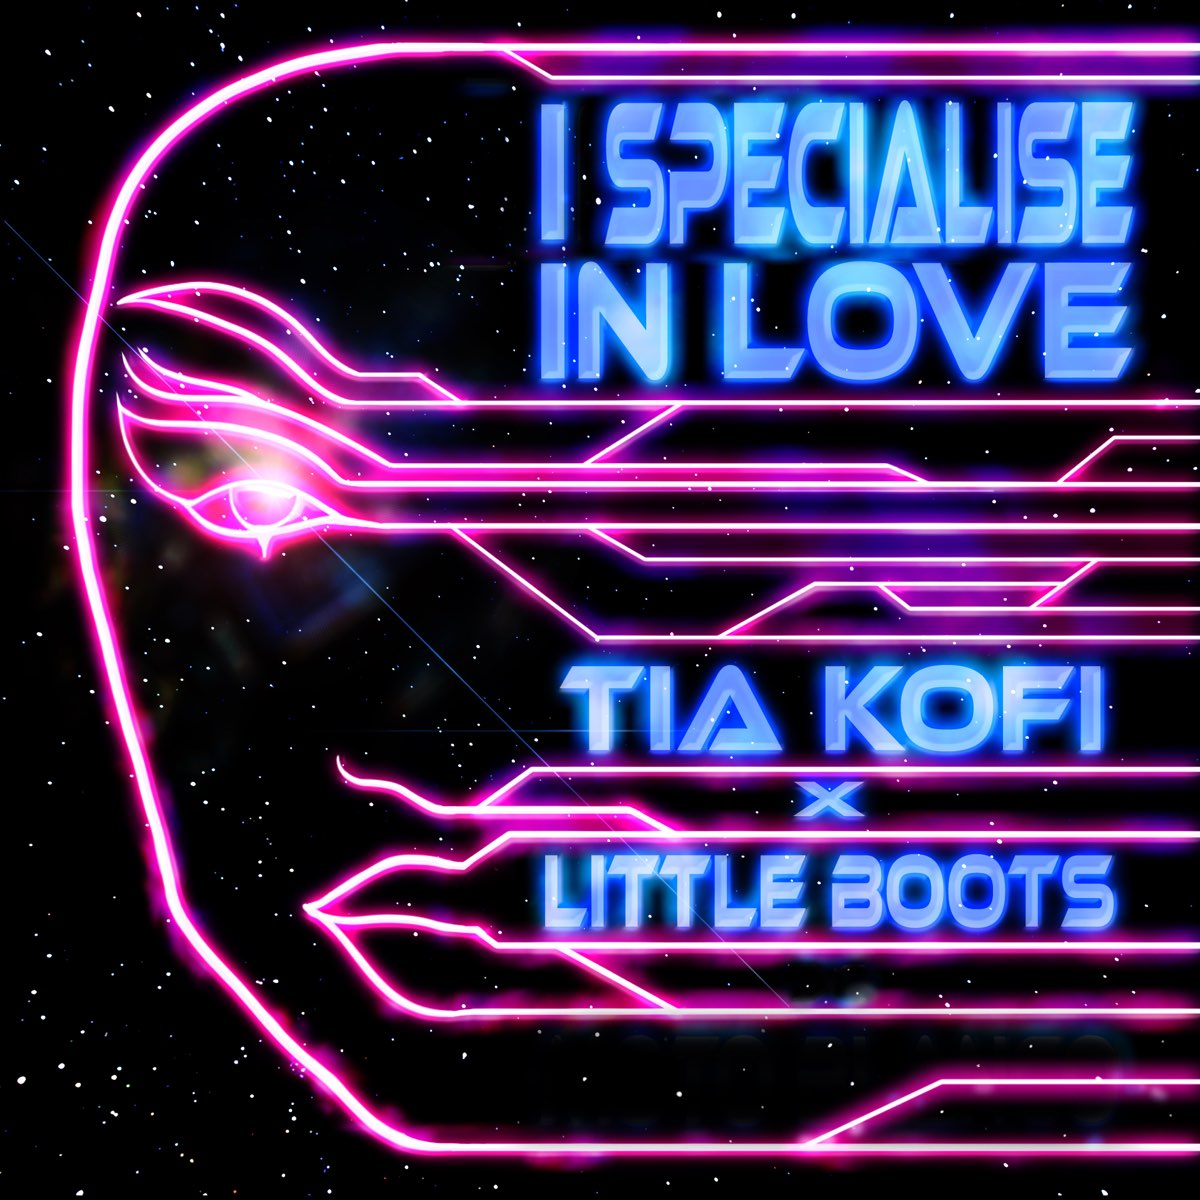 Tia Kofi & Little Boots I Specialise in Love cover artwork